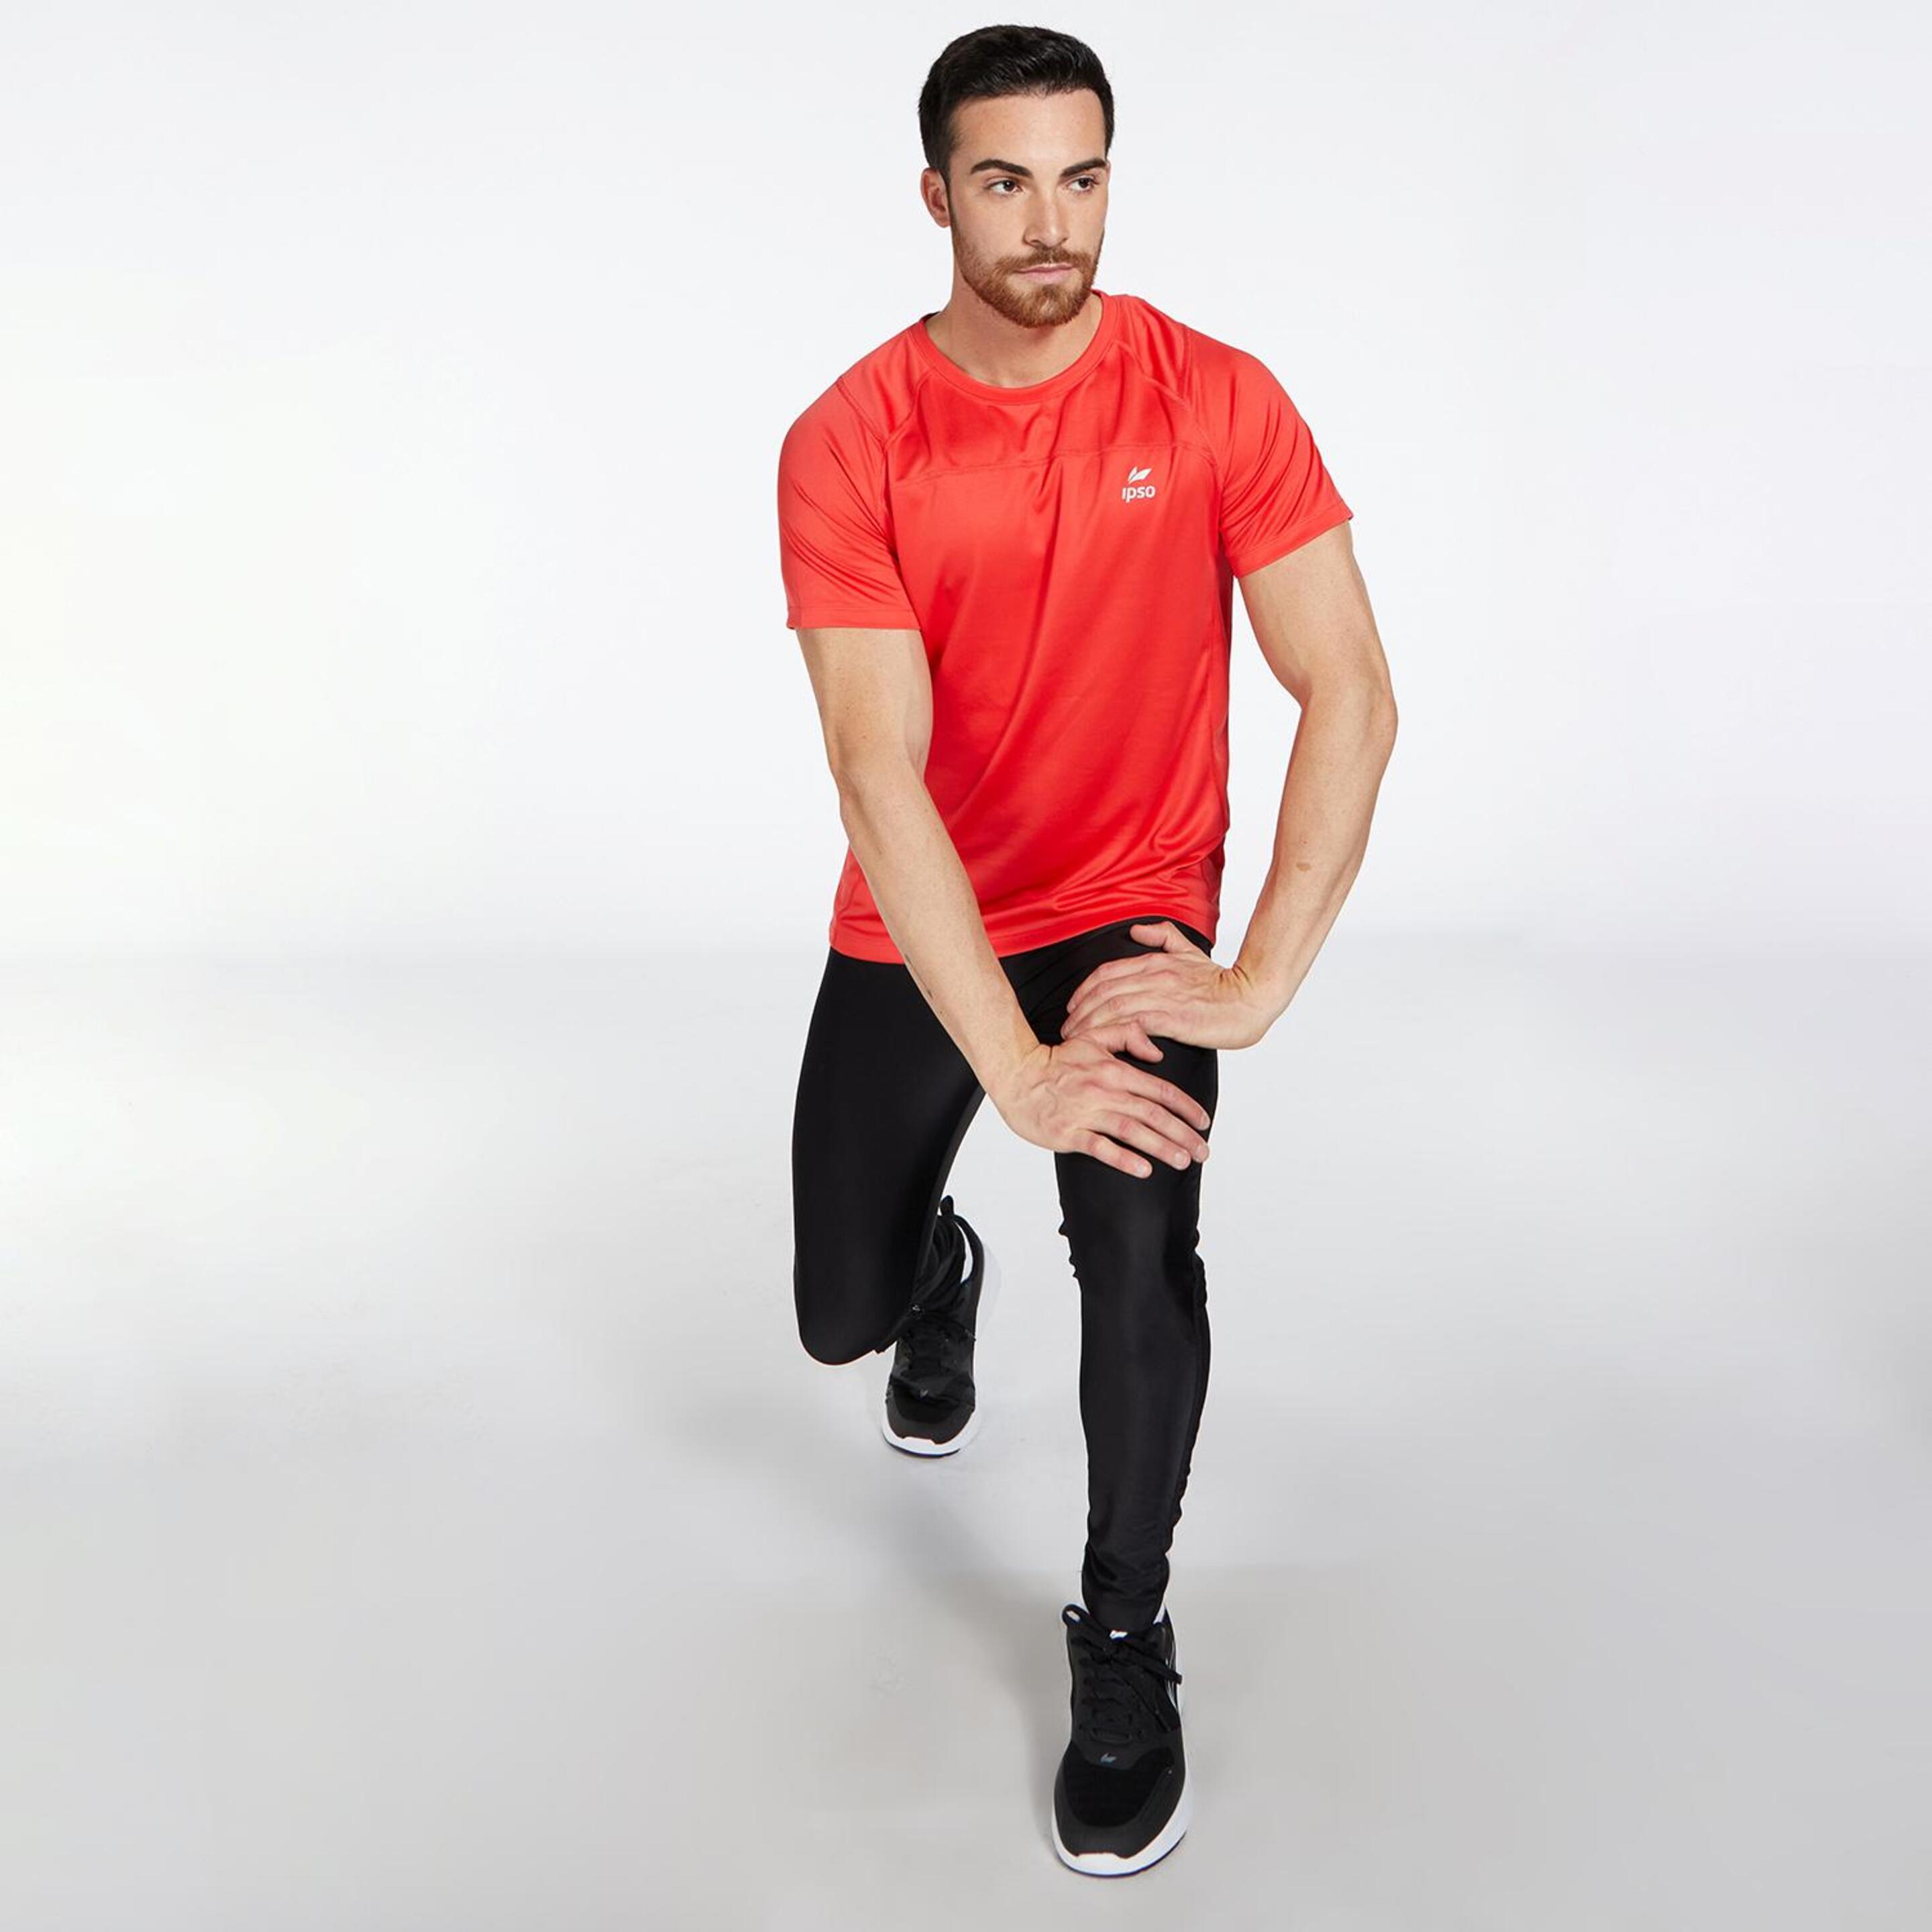 Ipso Basic - Rojo - Camiseta Running Hombre